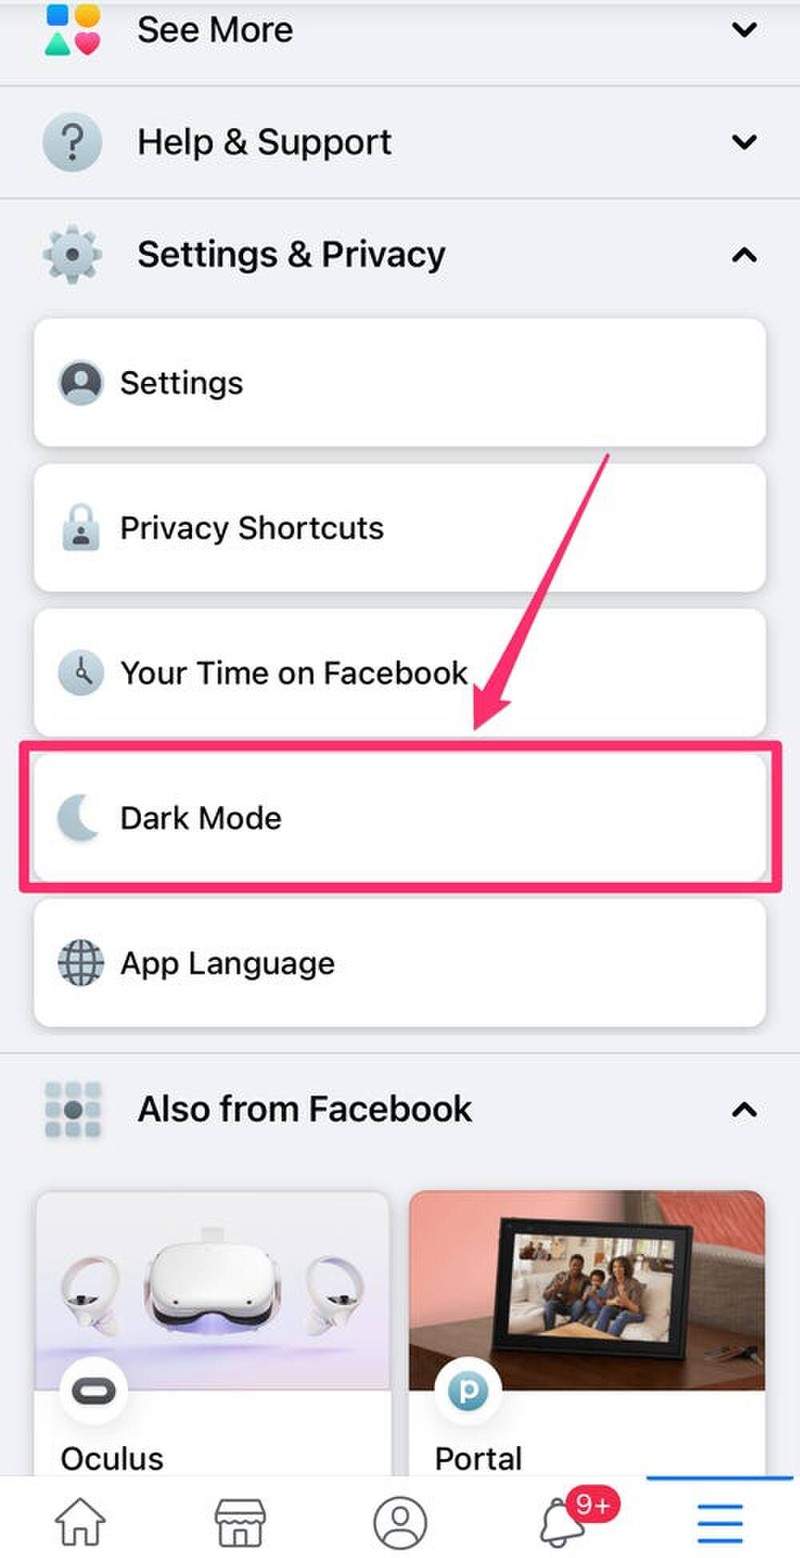 Cach mo che do Dark Mode cua Facebook tren tat ca cac thiet bi-Hinh-3